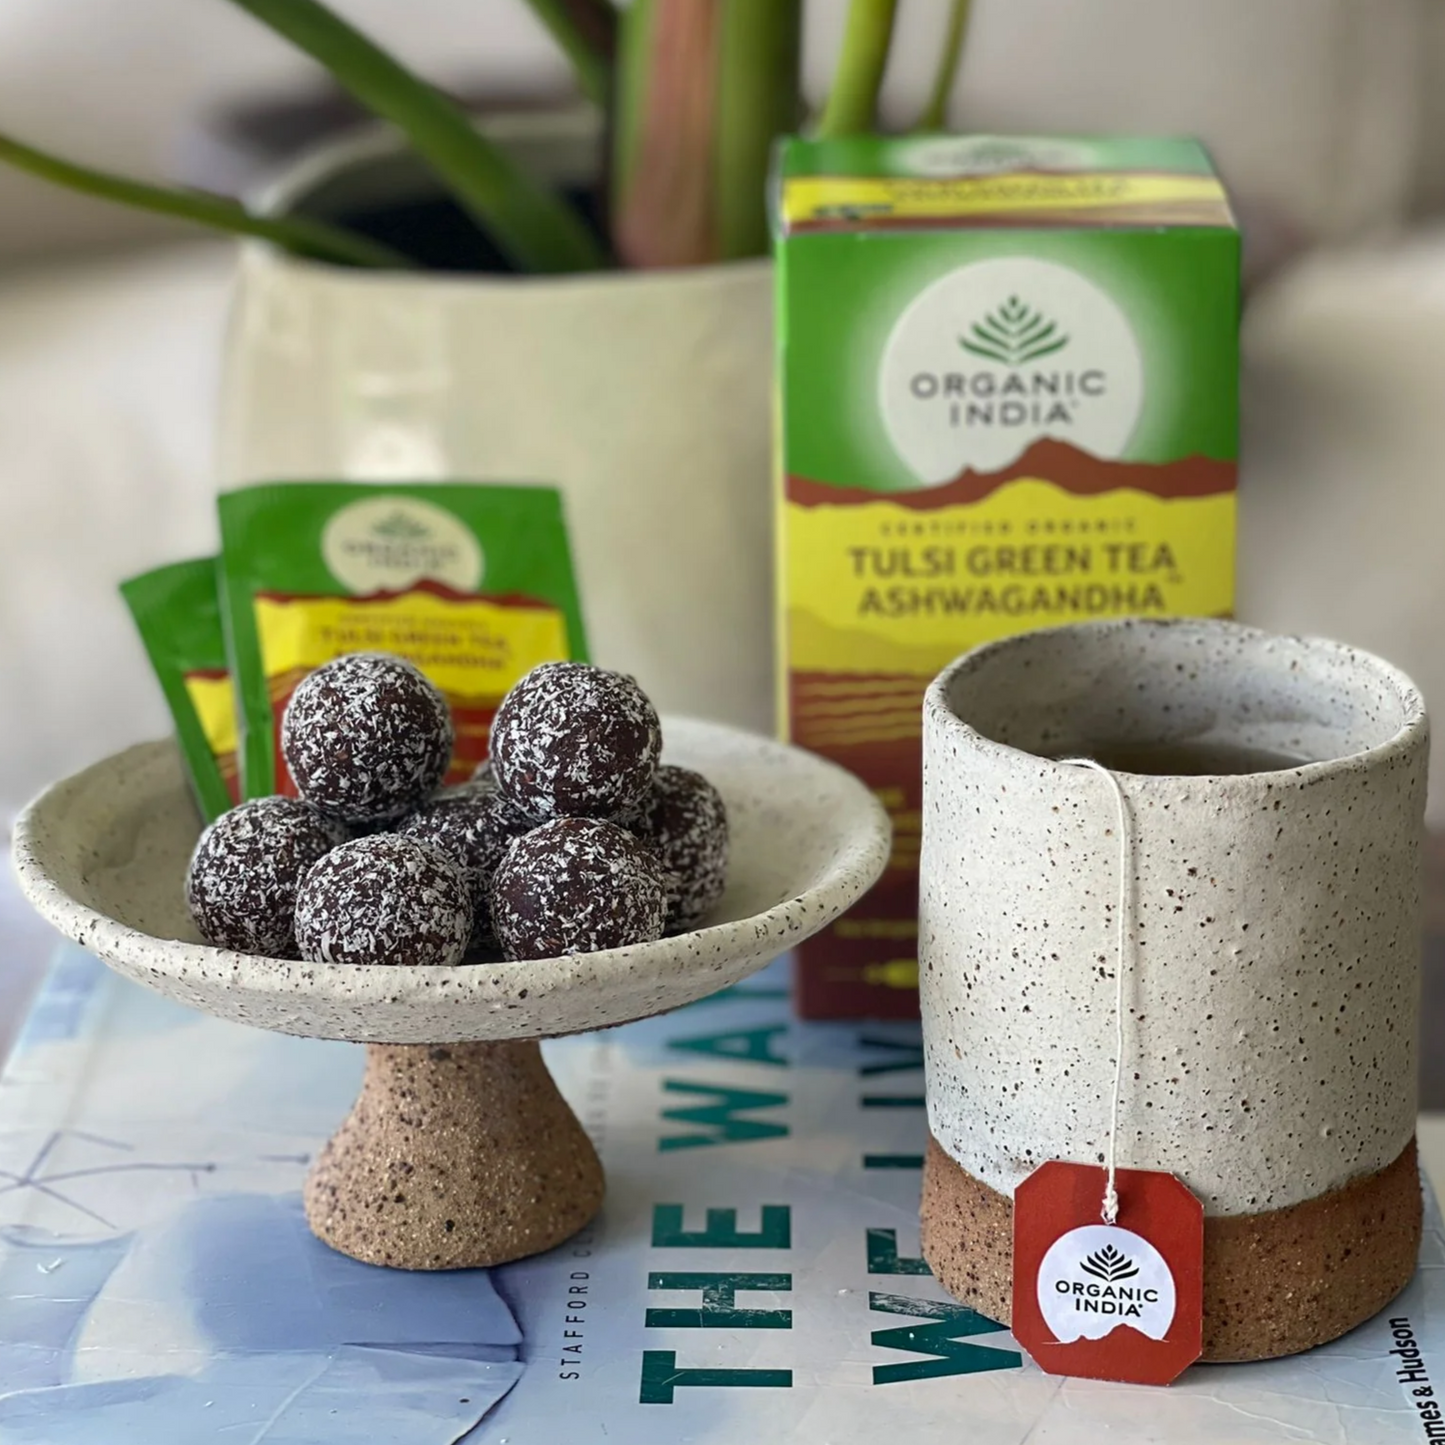 Organic India - Tulsi Green Tea Ashwagandha